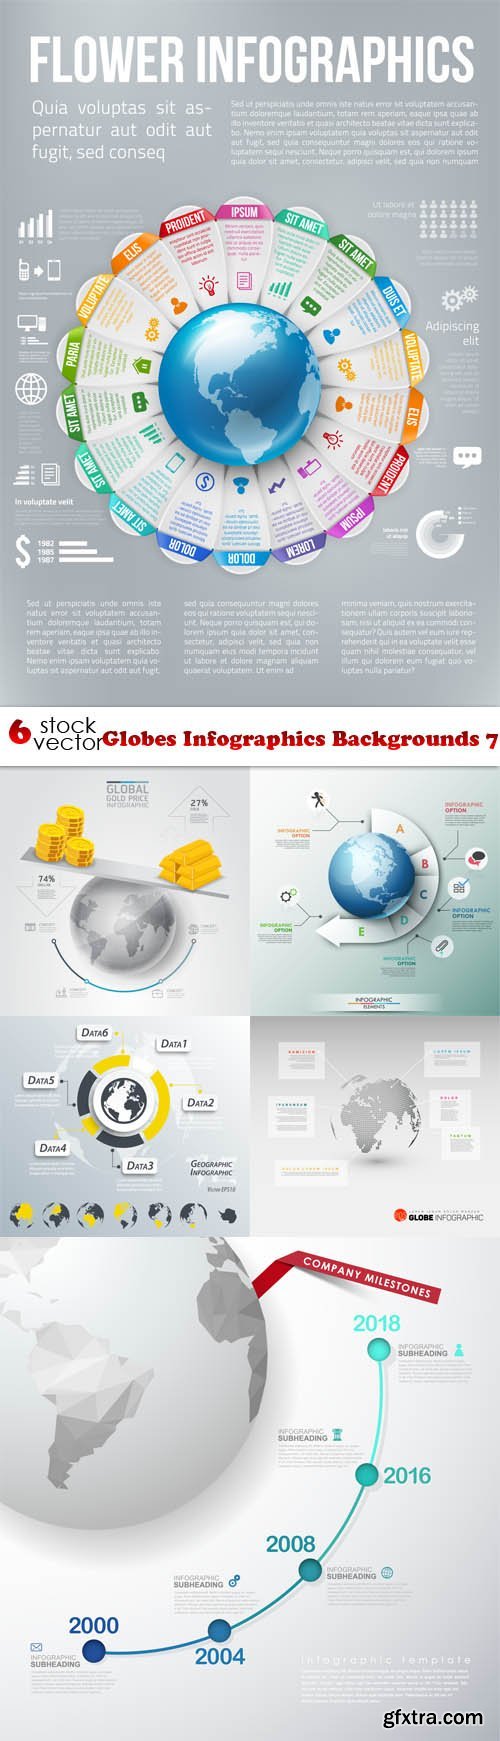 Vectors - Globes Infographics Backgrounds 7